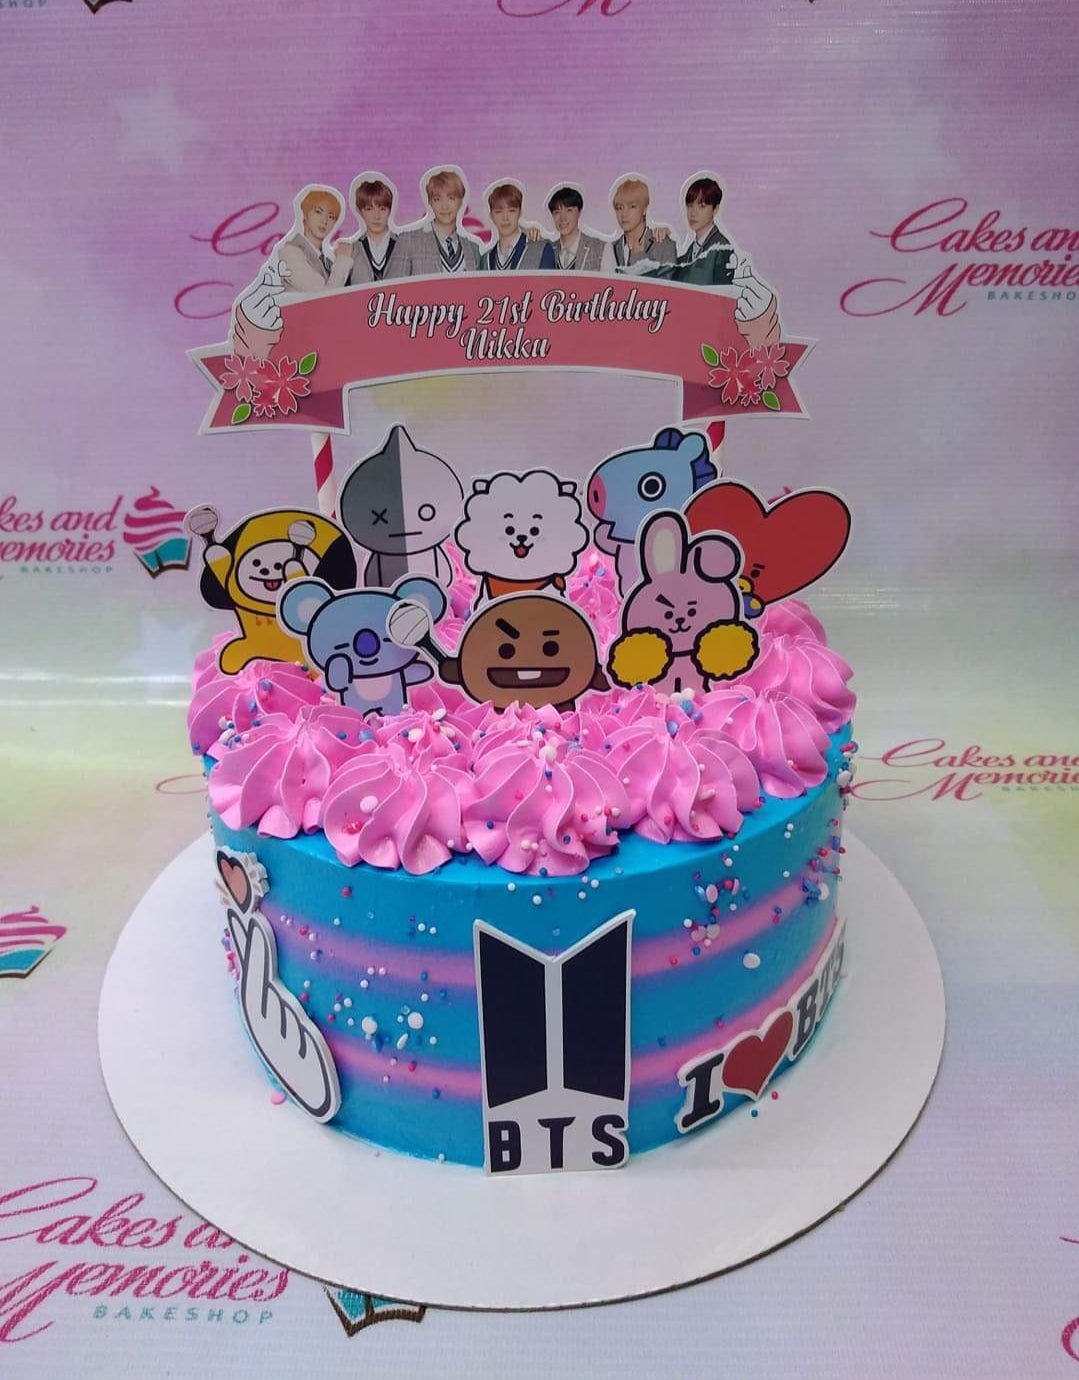 BT21 BTS Birthday Cakes 1.2 kg - Sakigifts.com